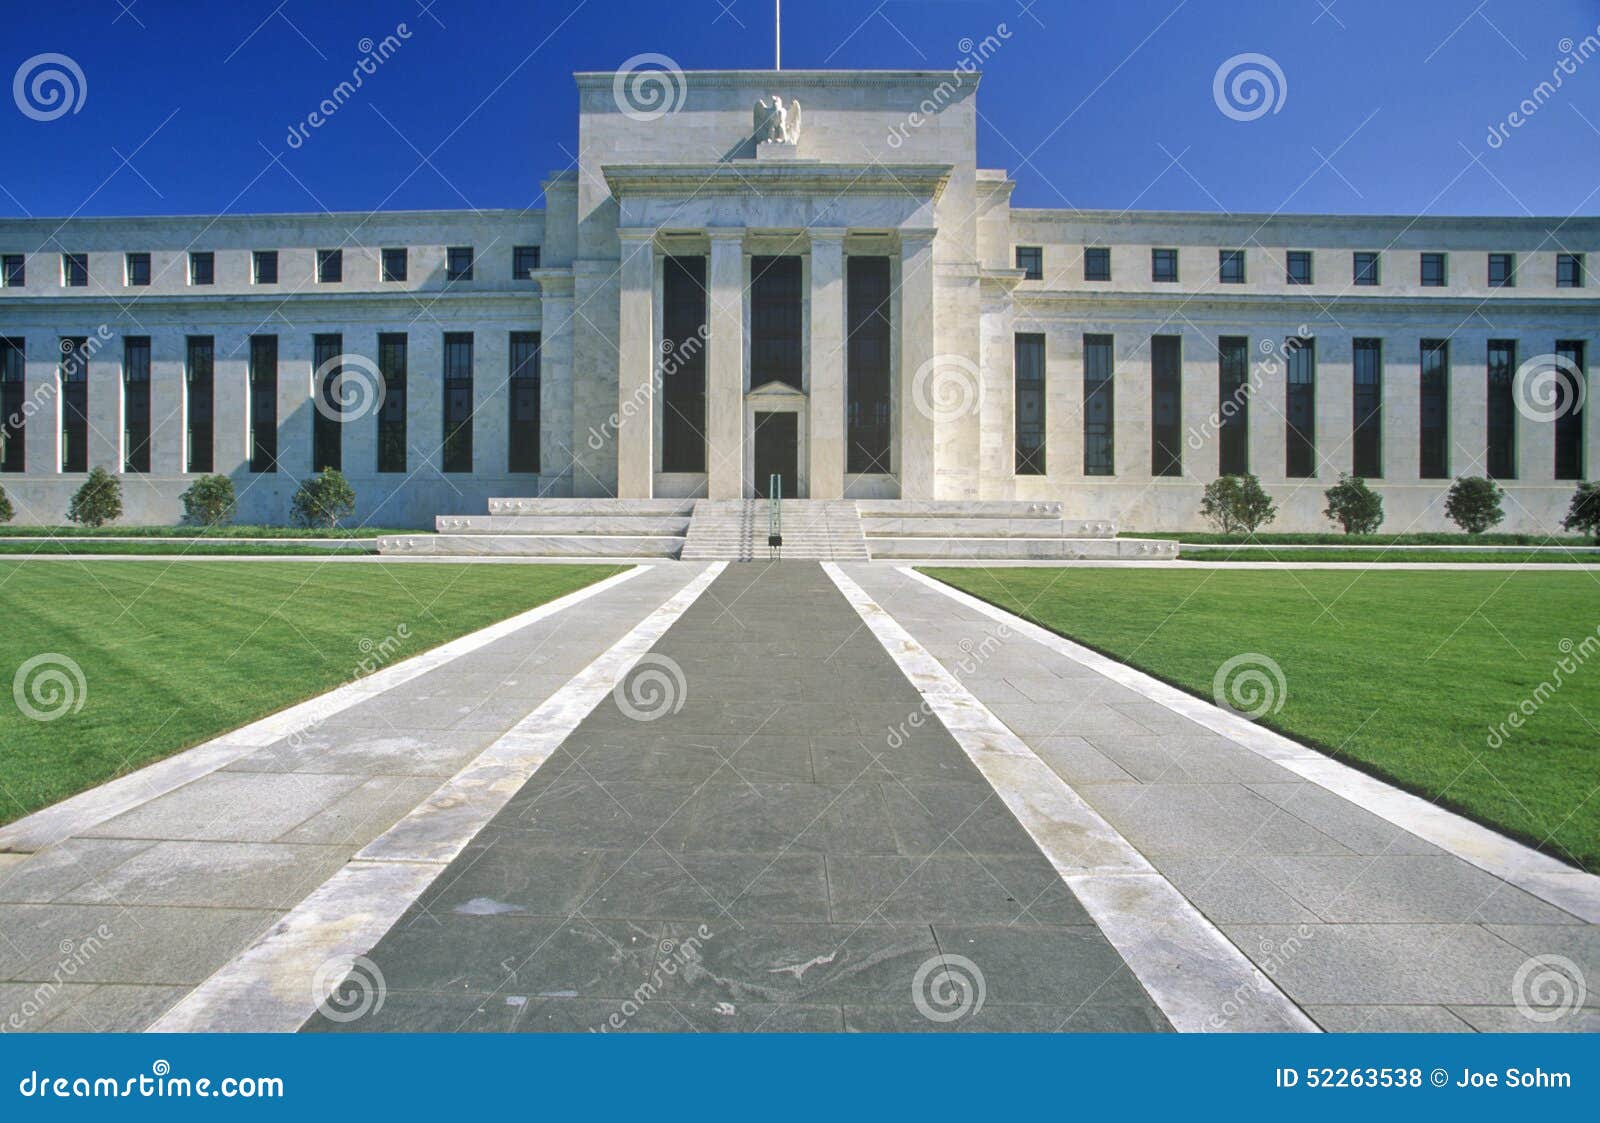 federal reserve bank, washington, dc